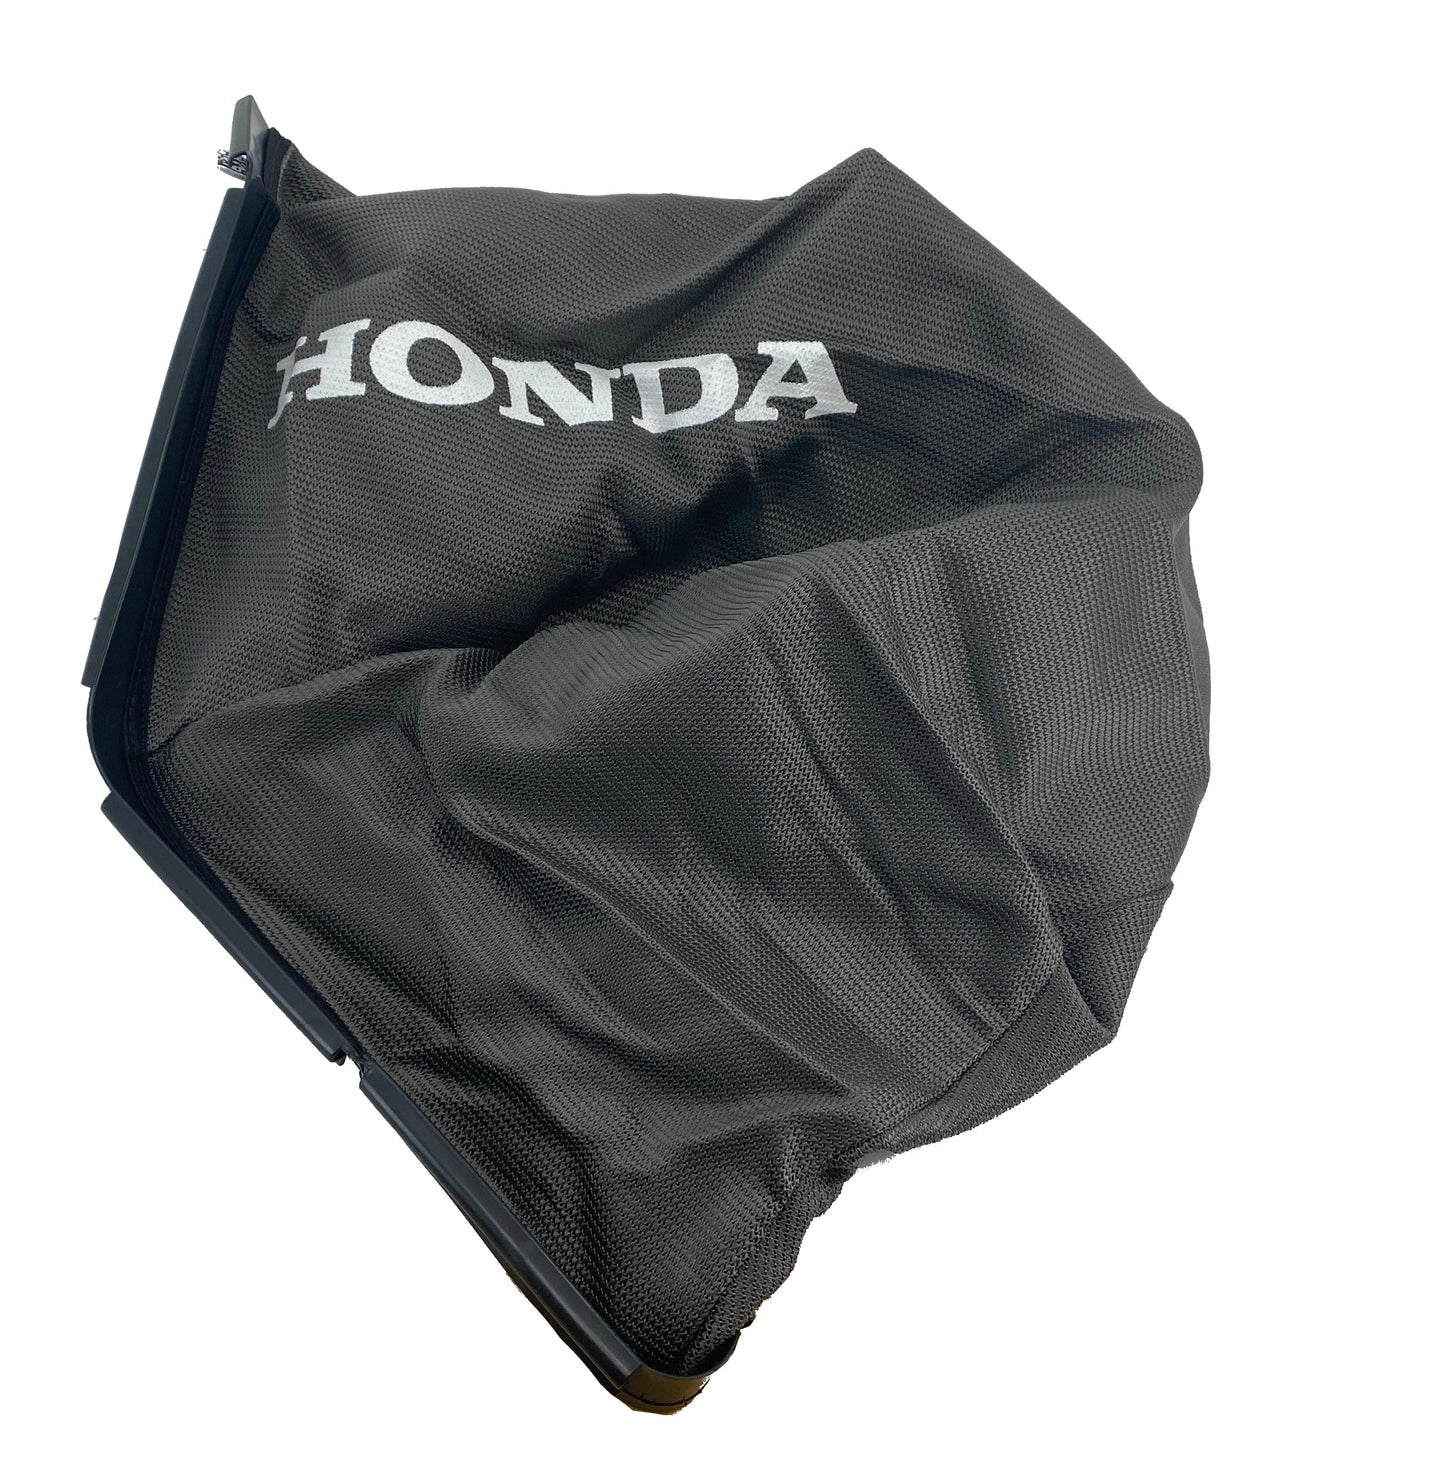 Honda Original Equipment Fabric Grass Bag - 81320-VR8-N00